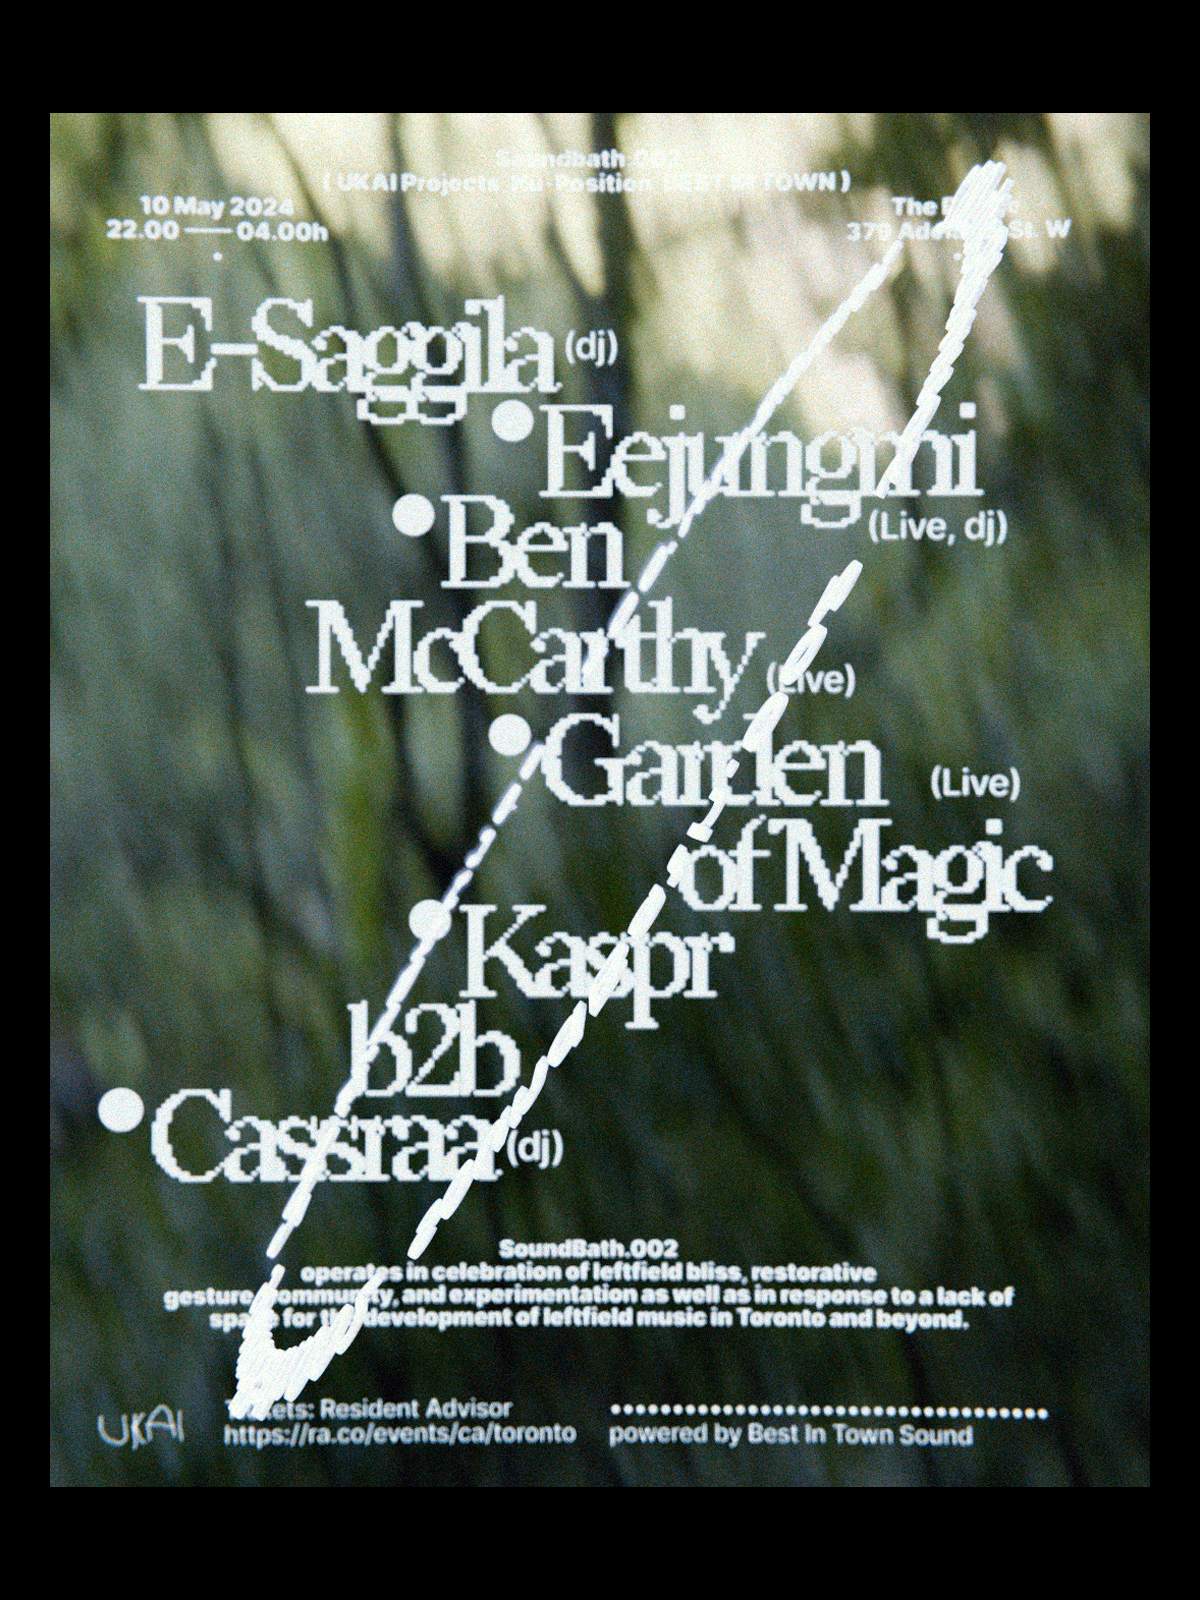 SoundBath.002 - E-Saggila, EEJUNGMI, Garden of Magic, Ben McCarthy, Kaspr b2b CASSRAA - フライヤー表